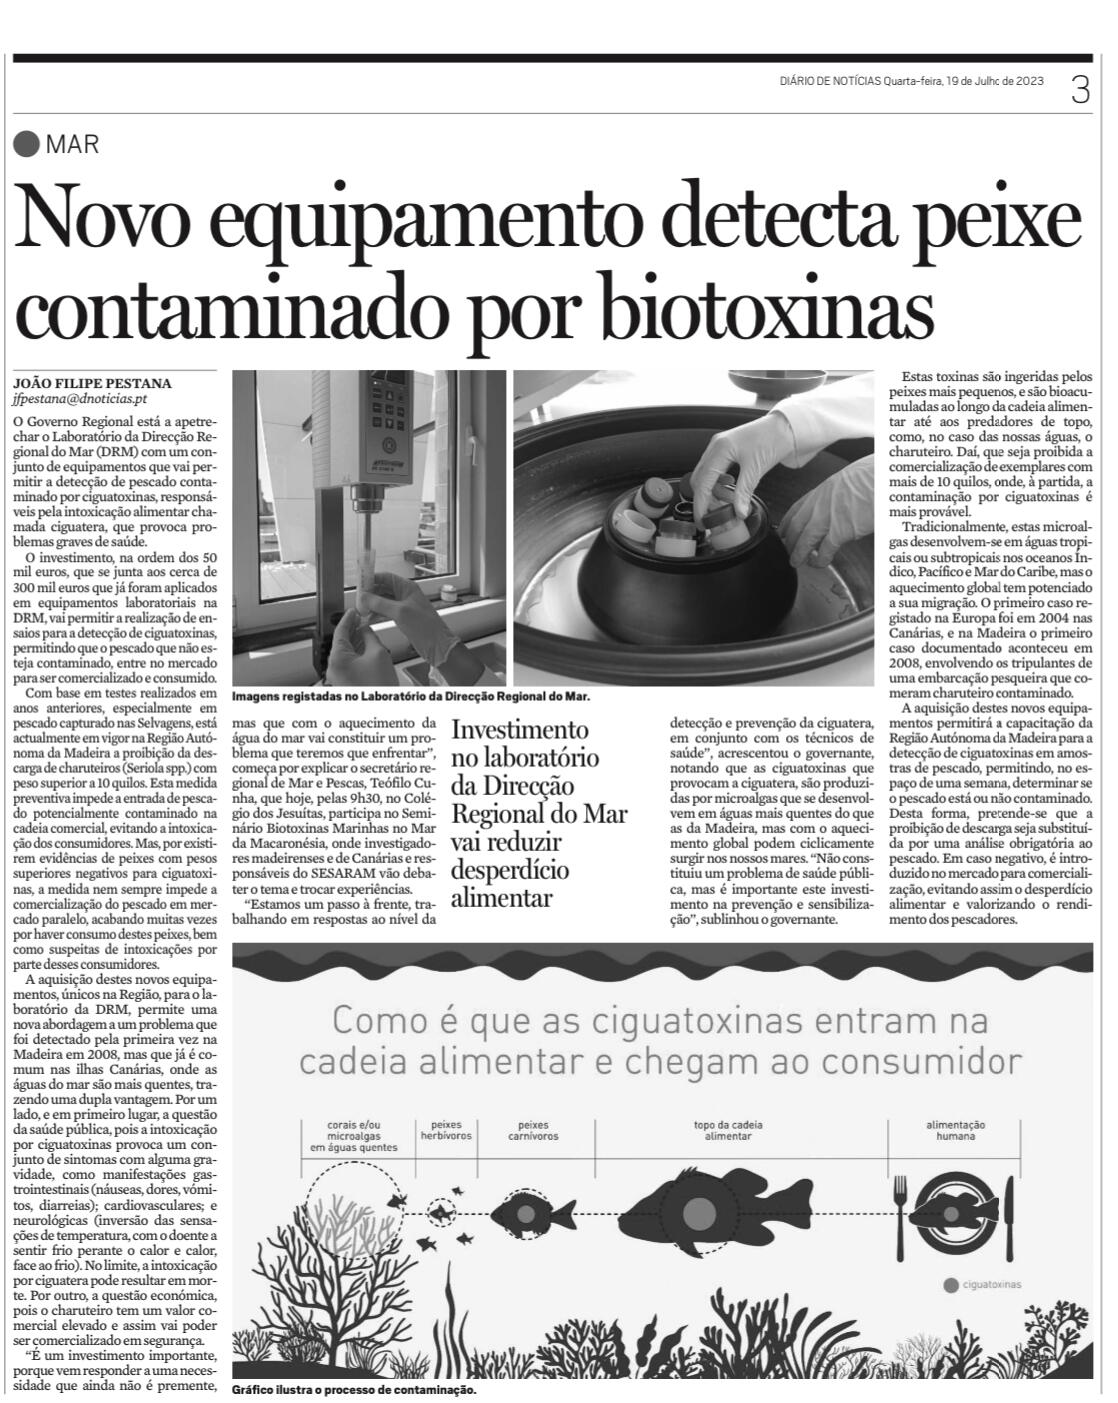 Novo equipamento deteta peixe contaminado por biotoxinas